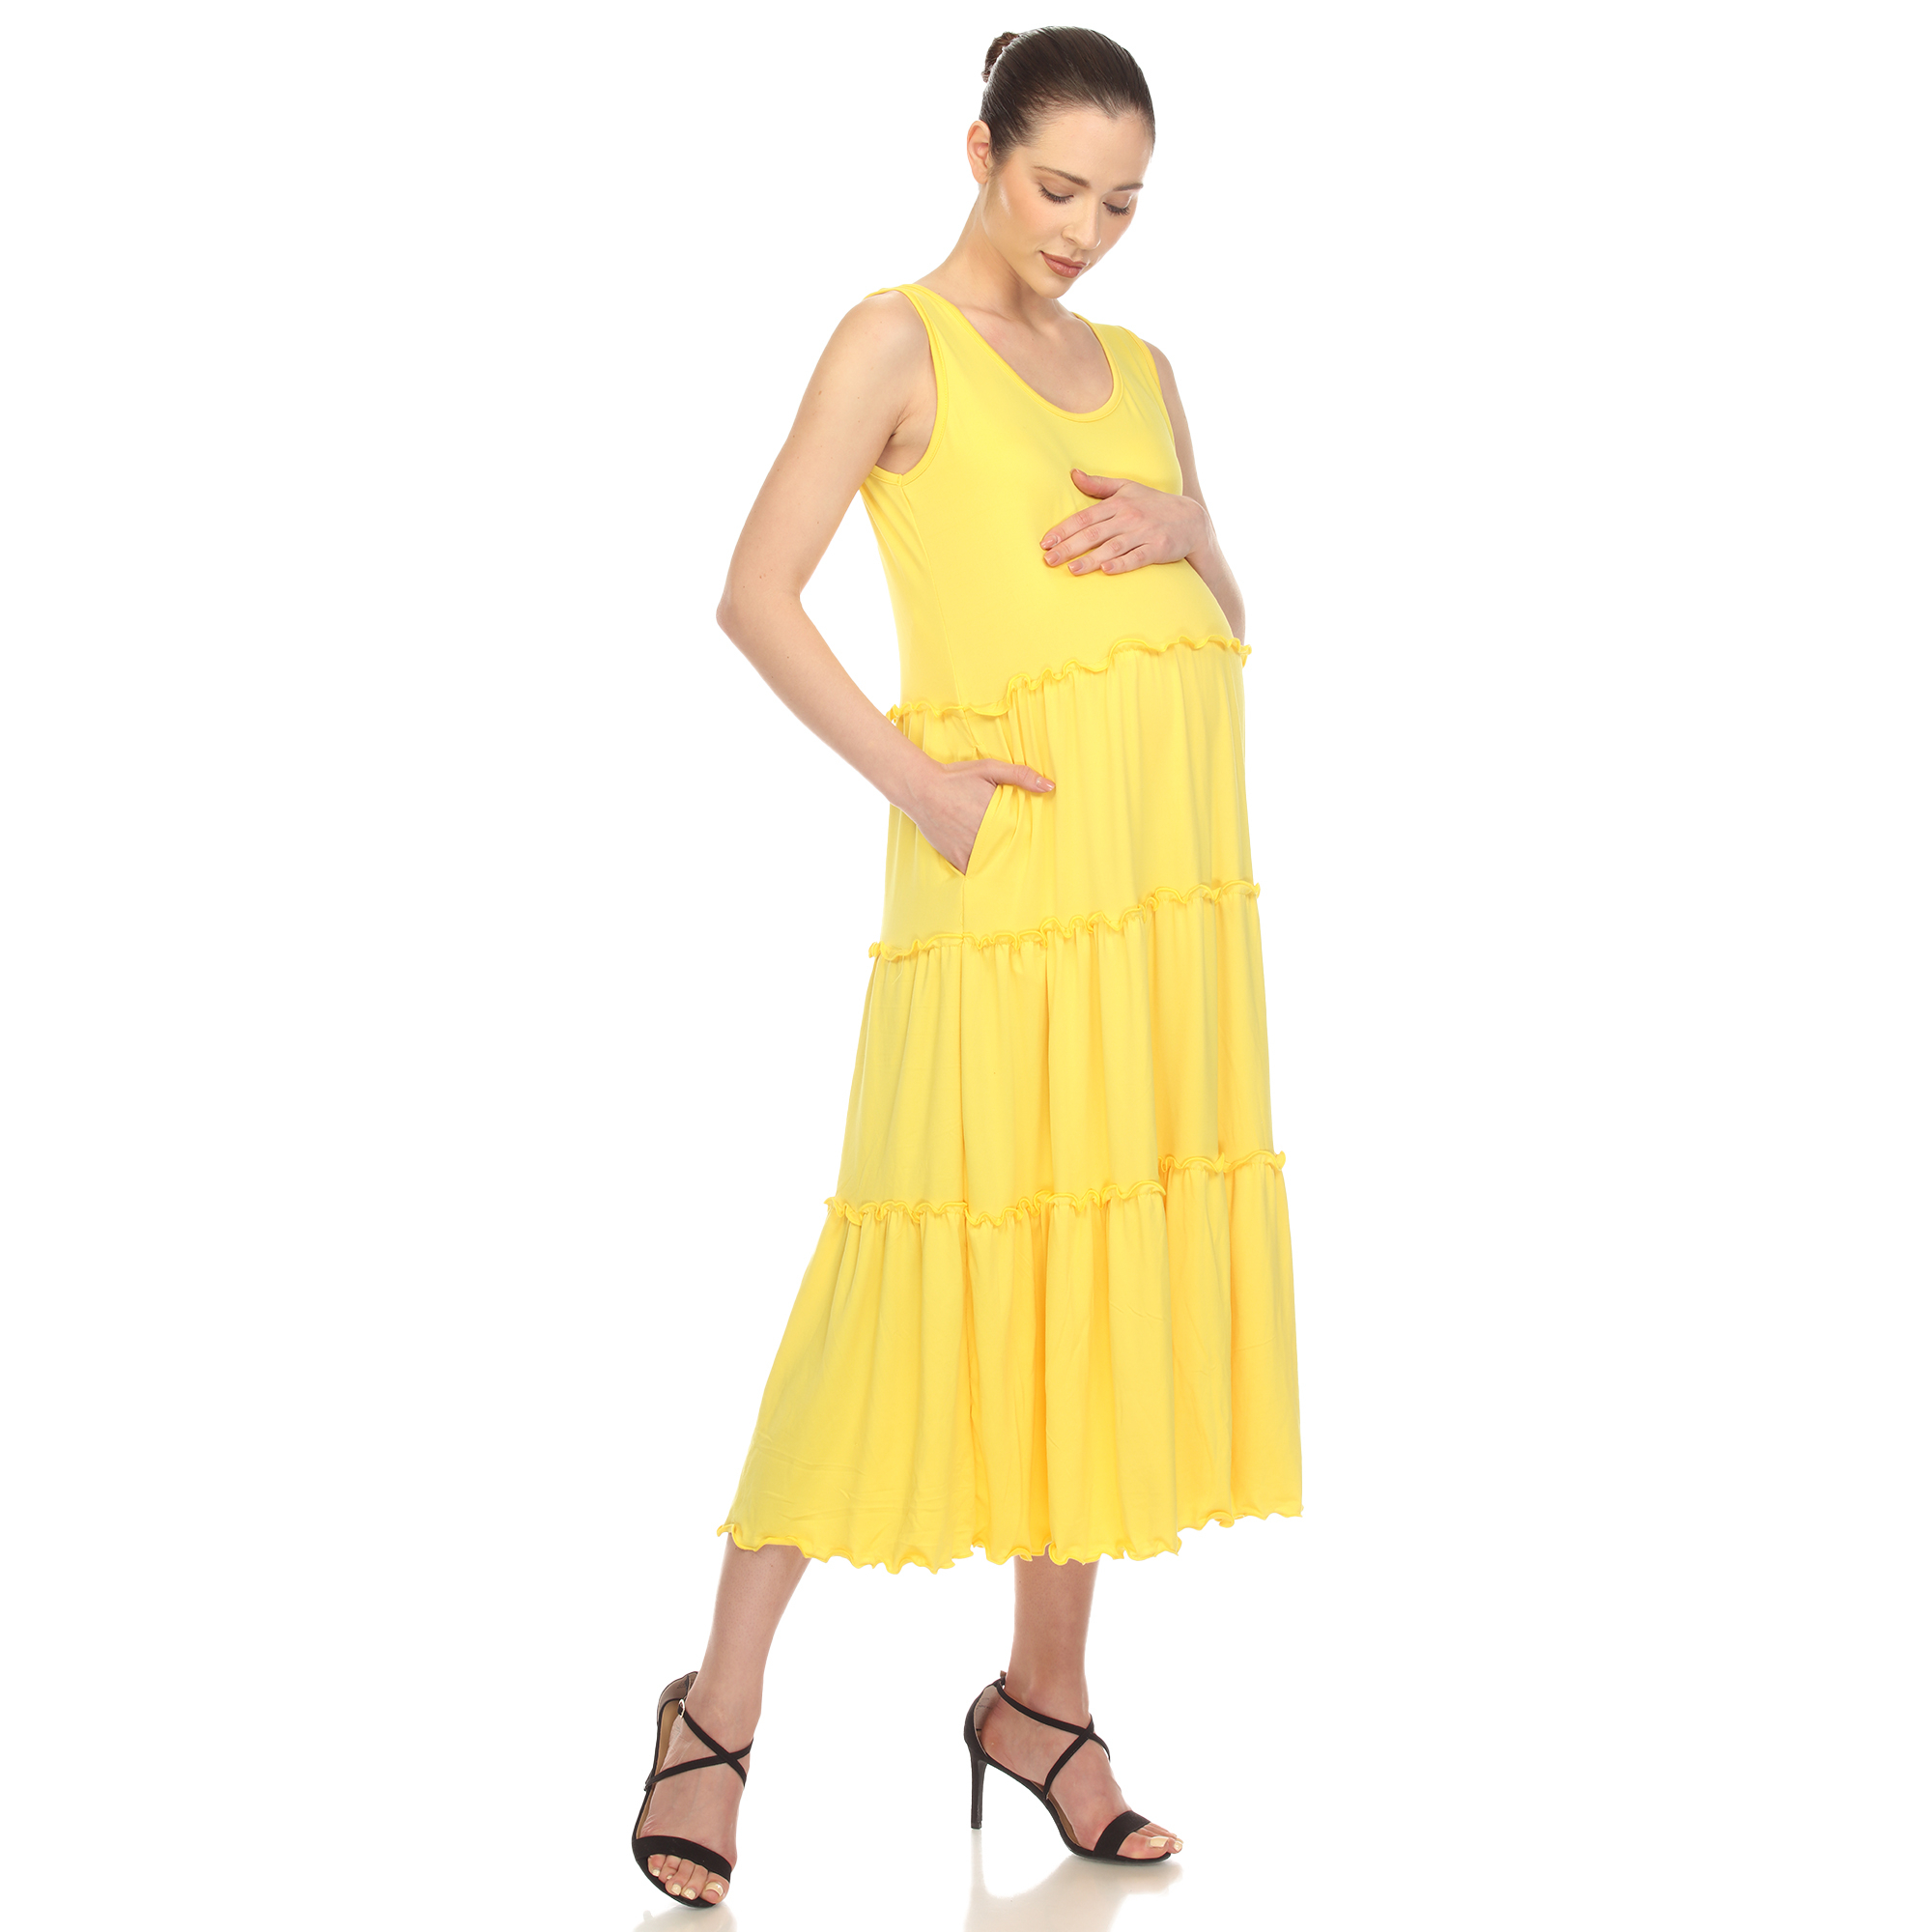 White Mark Women's Maternity Scoop Neck Tiered Midi Dress - Canary Yellow, 2X